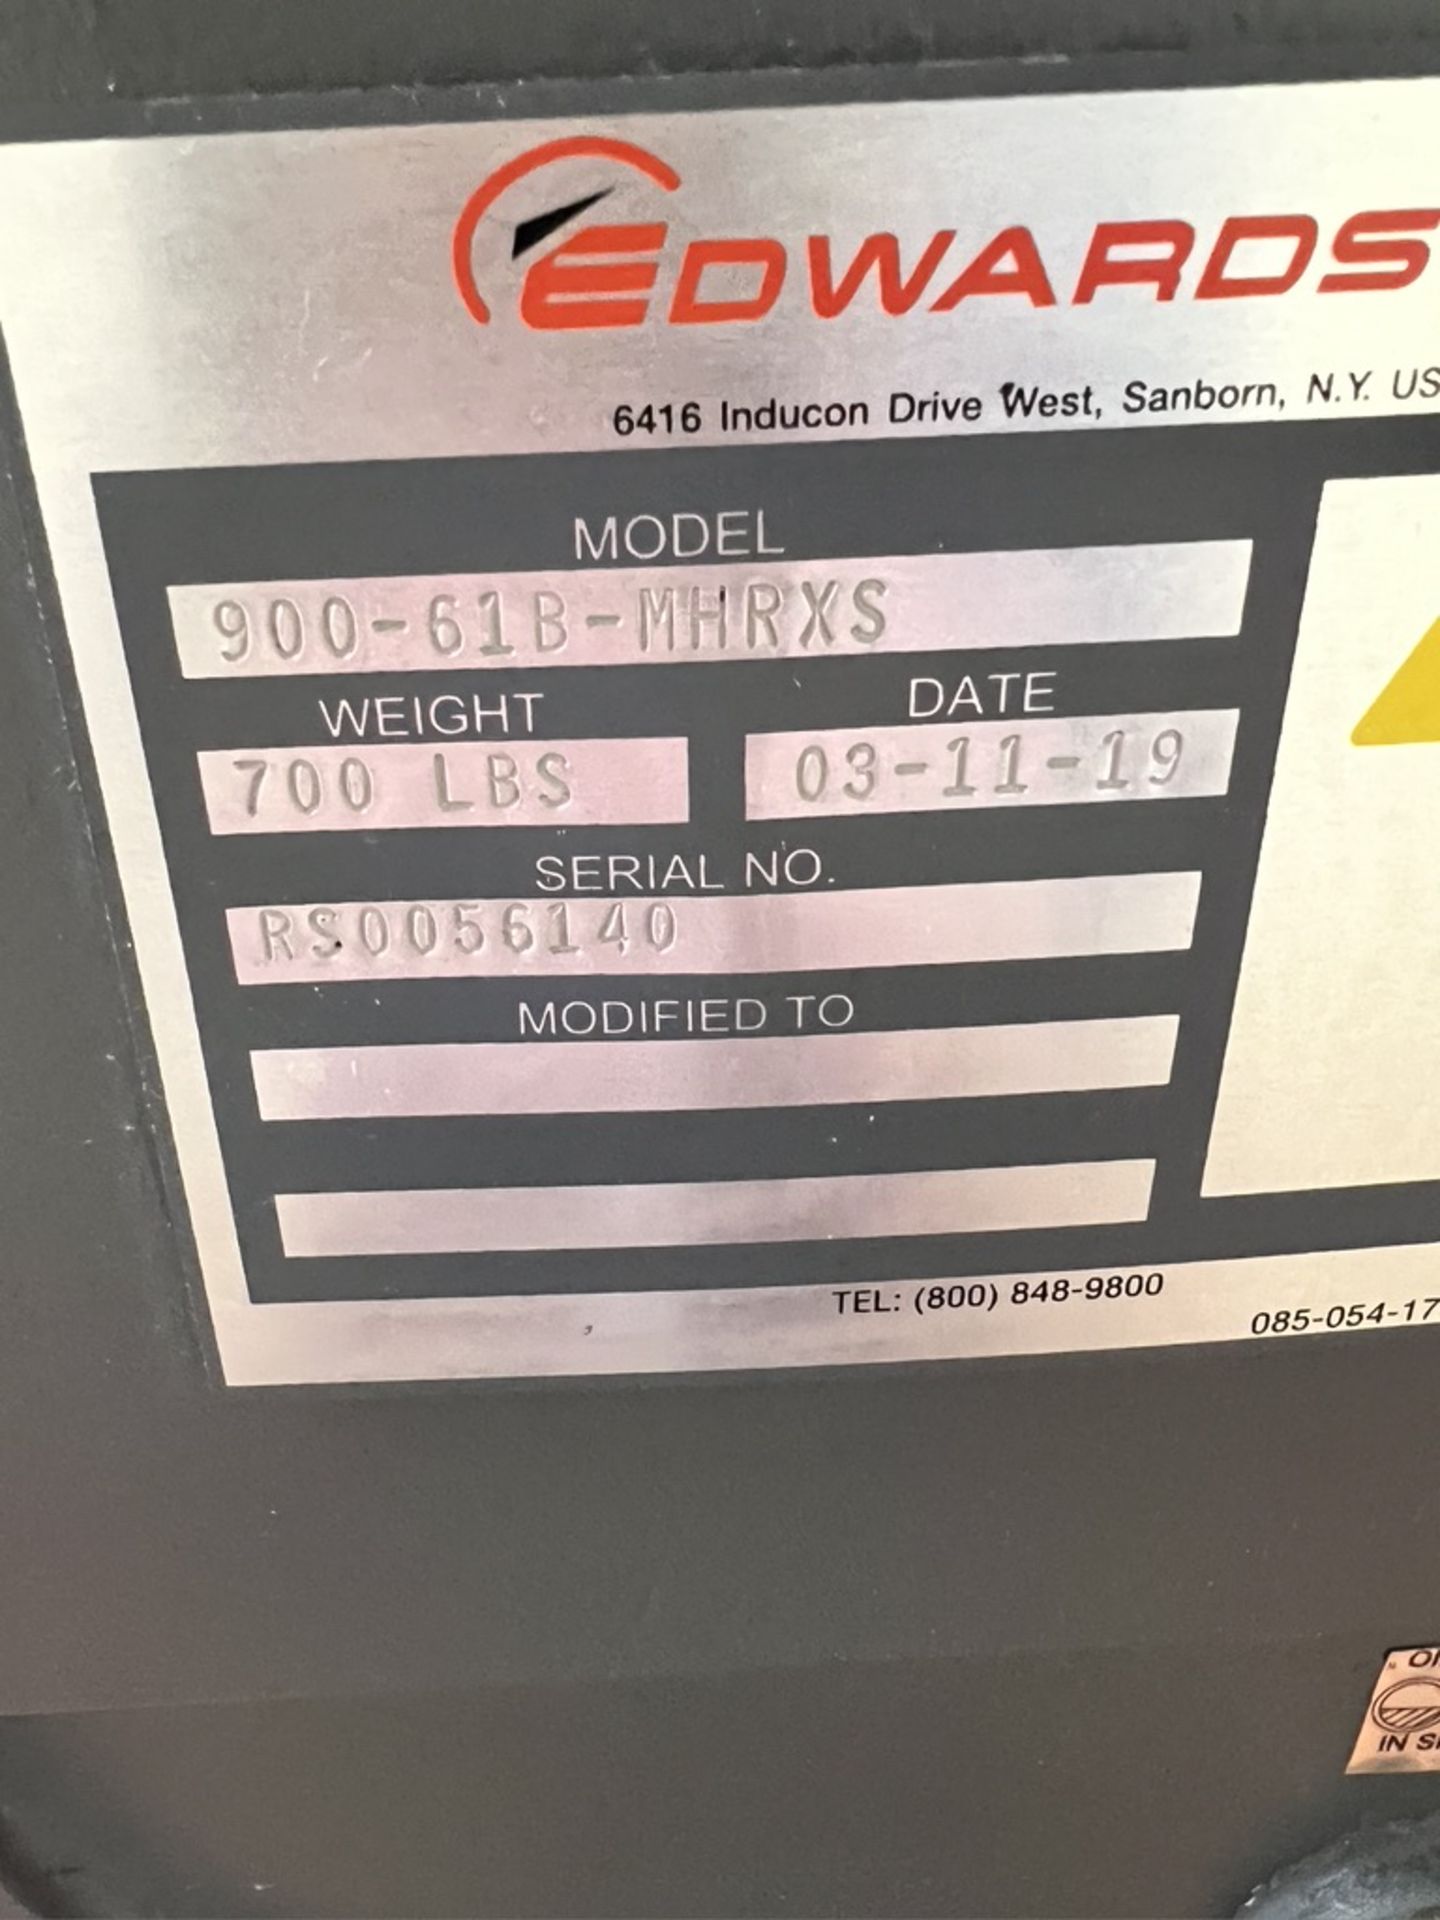 2019 STOKES EDWARDS MICROVAC ROTARY PISTON VACUUM PUMP, MODEL 900-61B-MHRXS, S/N RS0056140 - Image 5 of 6